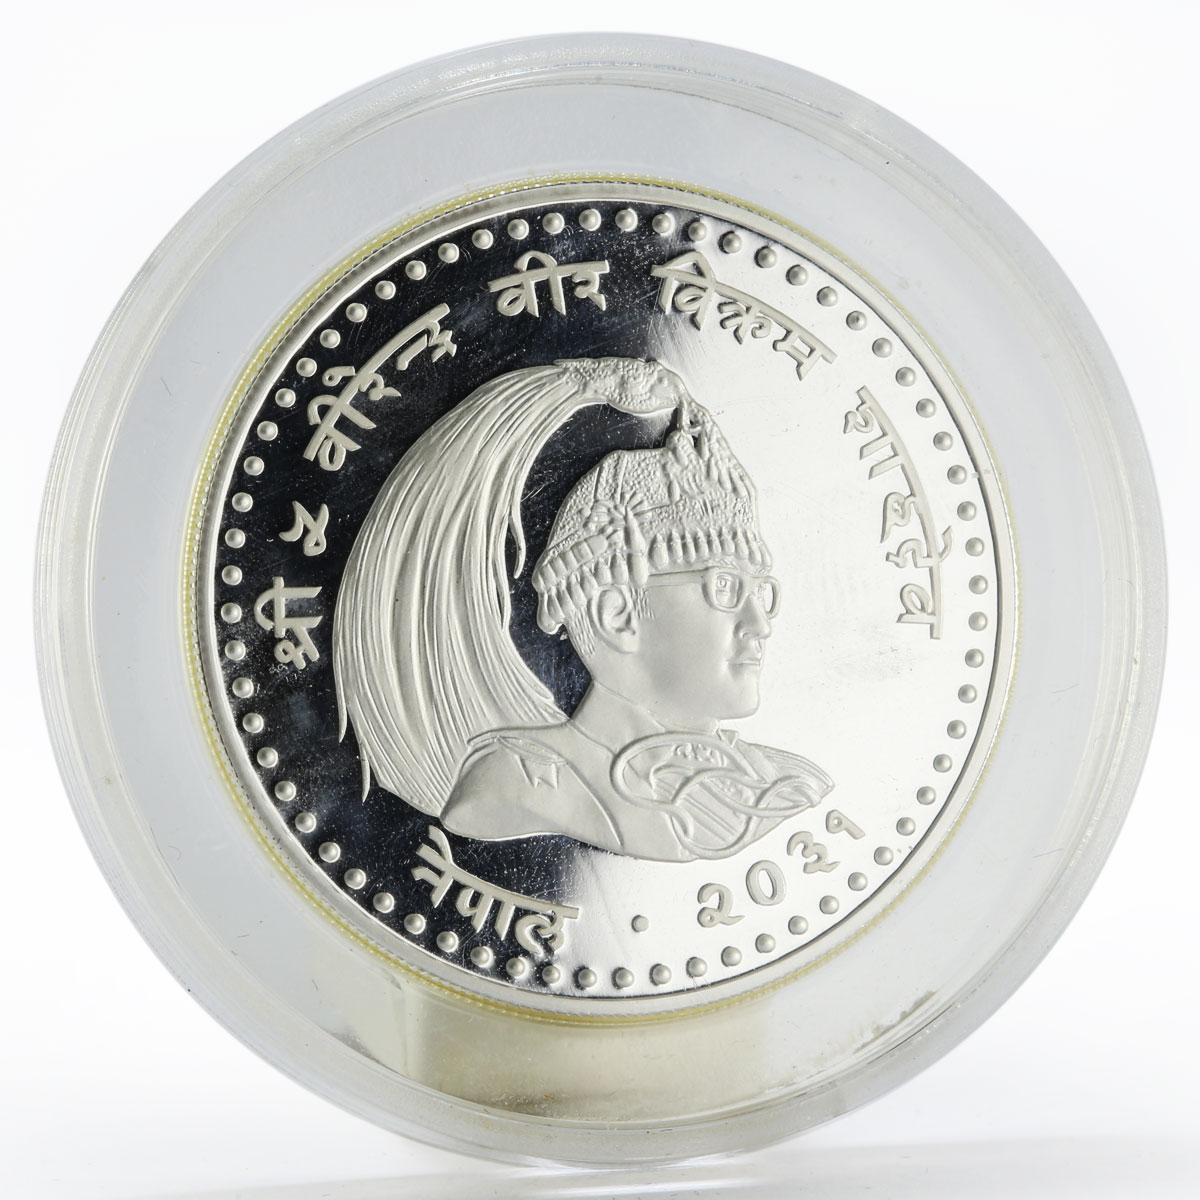 Nepal 100 rupees Birendra Bir Bikram Year of the Child silver proof coin 1974